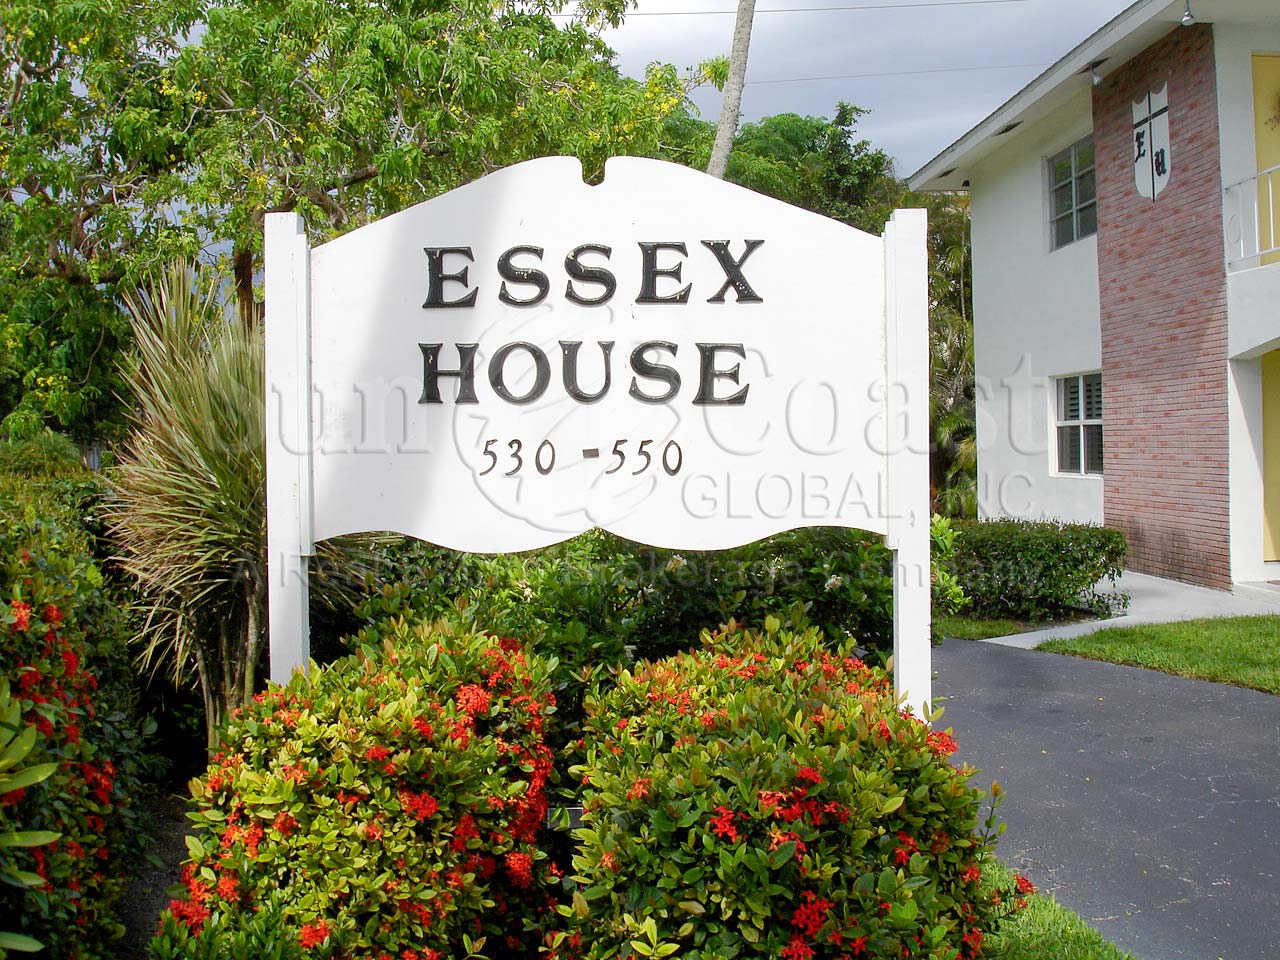 Essex House Signage